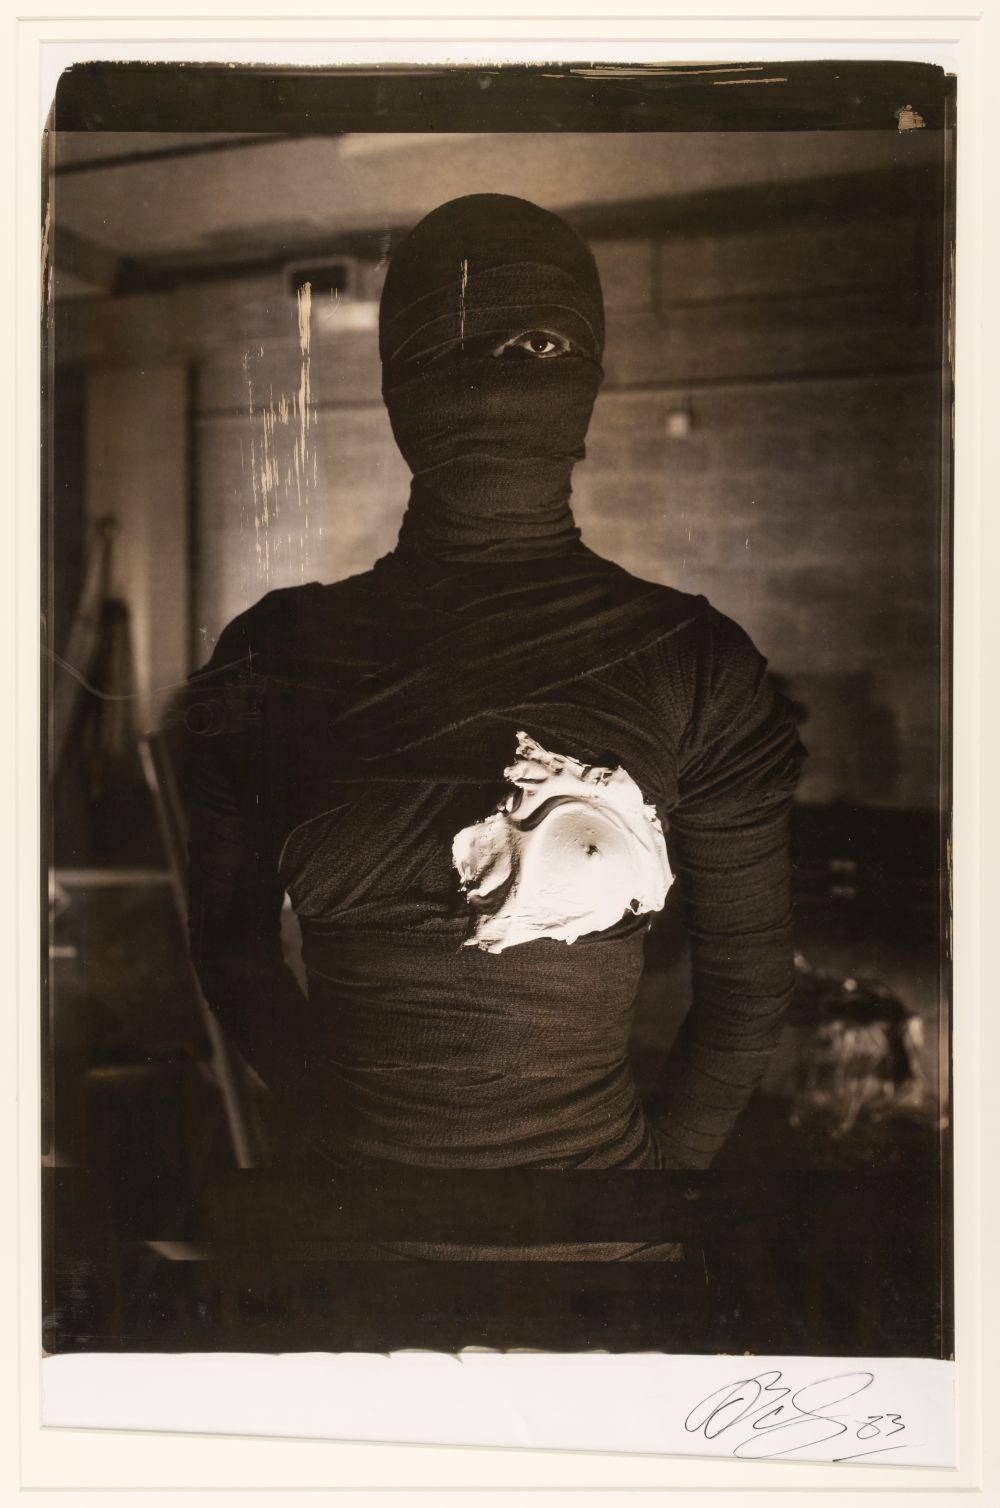 Bailey (David, born 1938). Masked Figure, Bradford, 1983